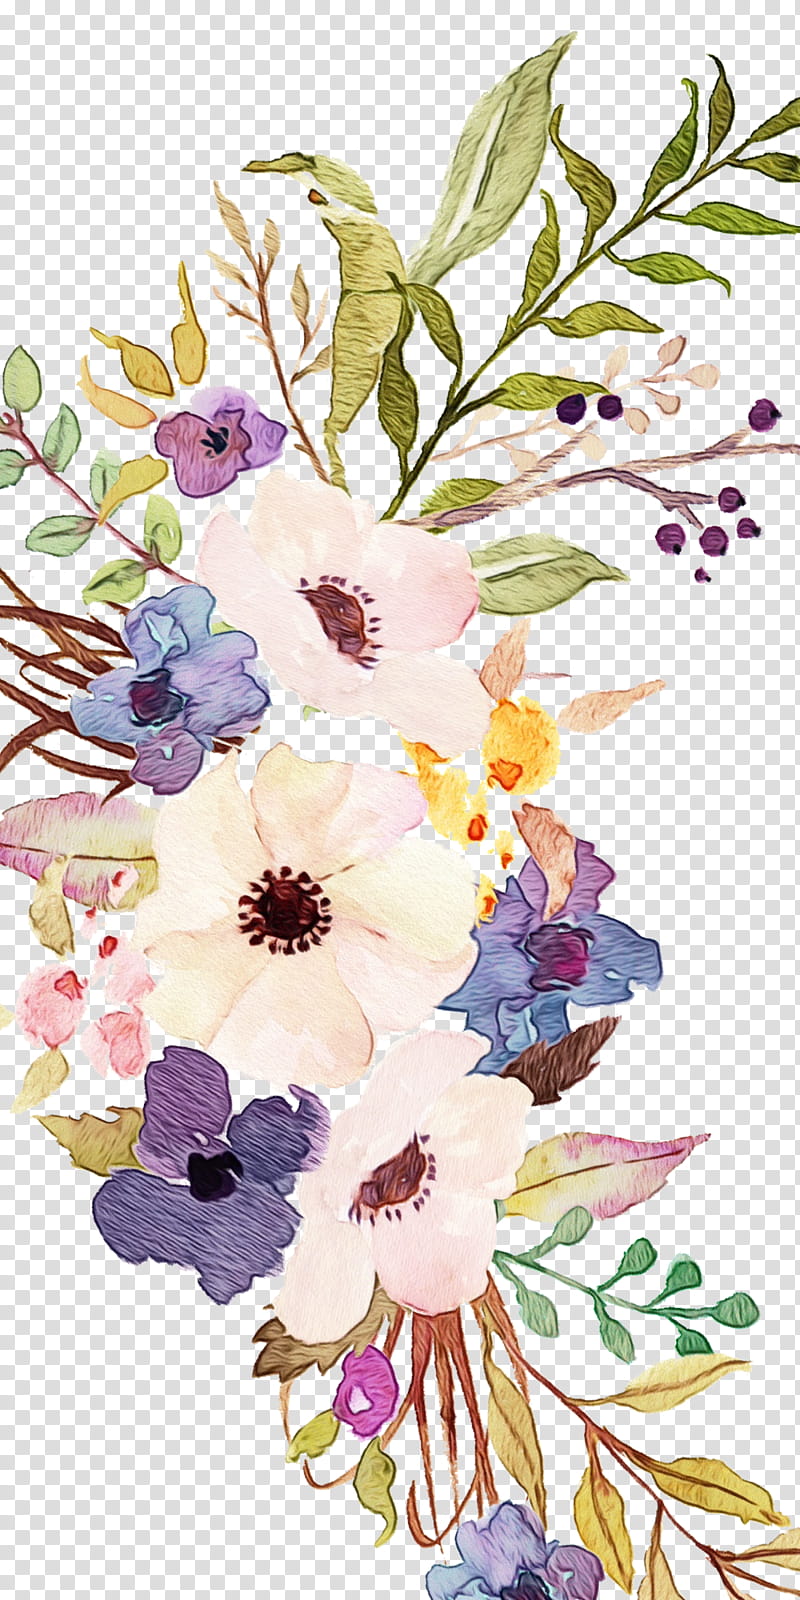 Bouquet Of Flowers Drawing, Floral Design, Watercolor Painting, Flower Bouquet, Pastel, Cut Flowers, Artist, Rose transparent background PNG clipart